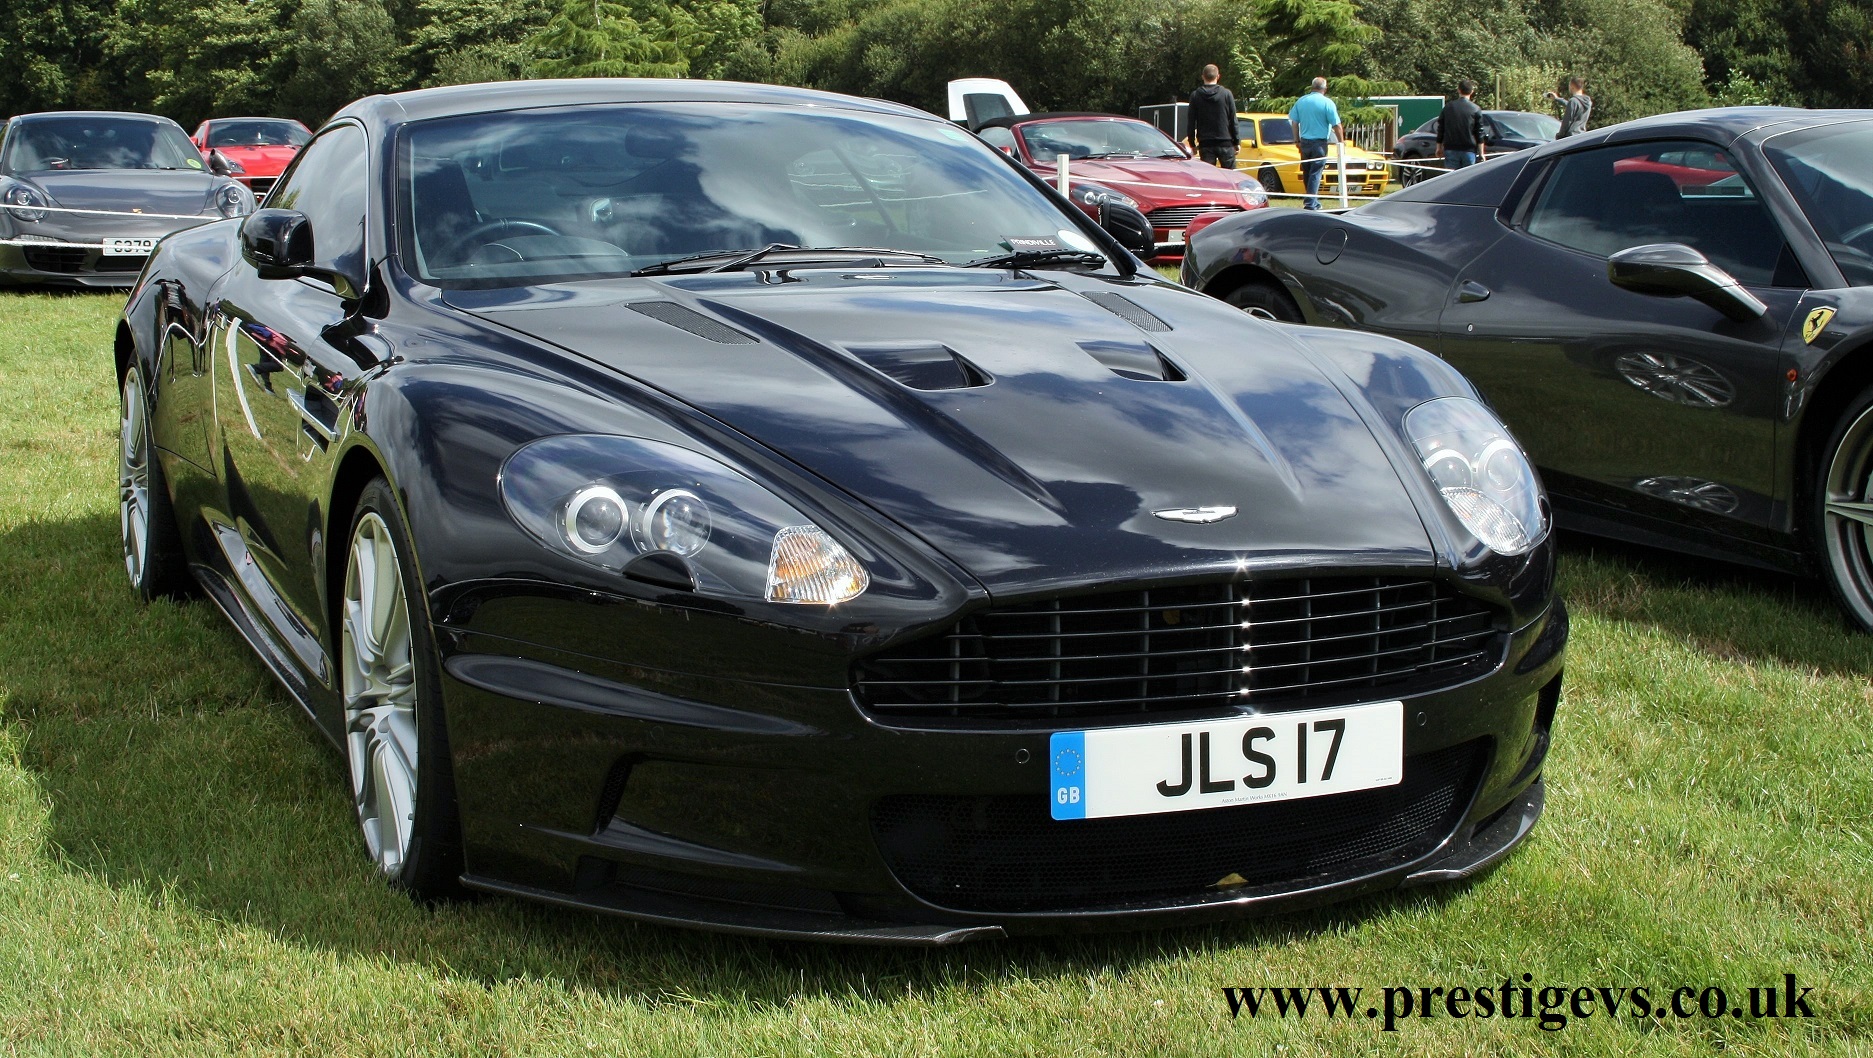 Aston Martin Prestigevs.co.uk